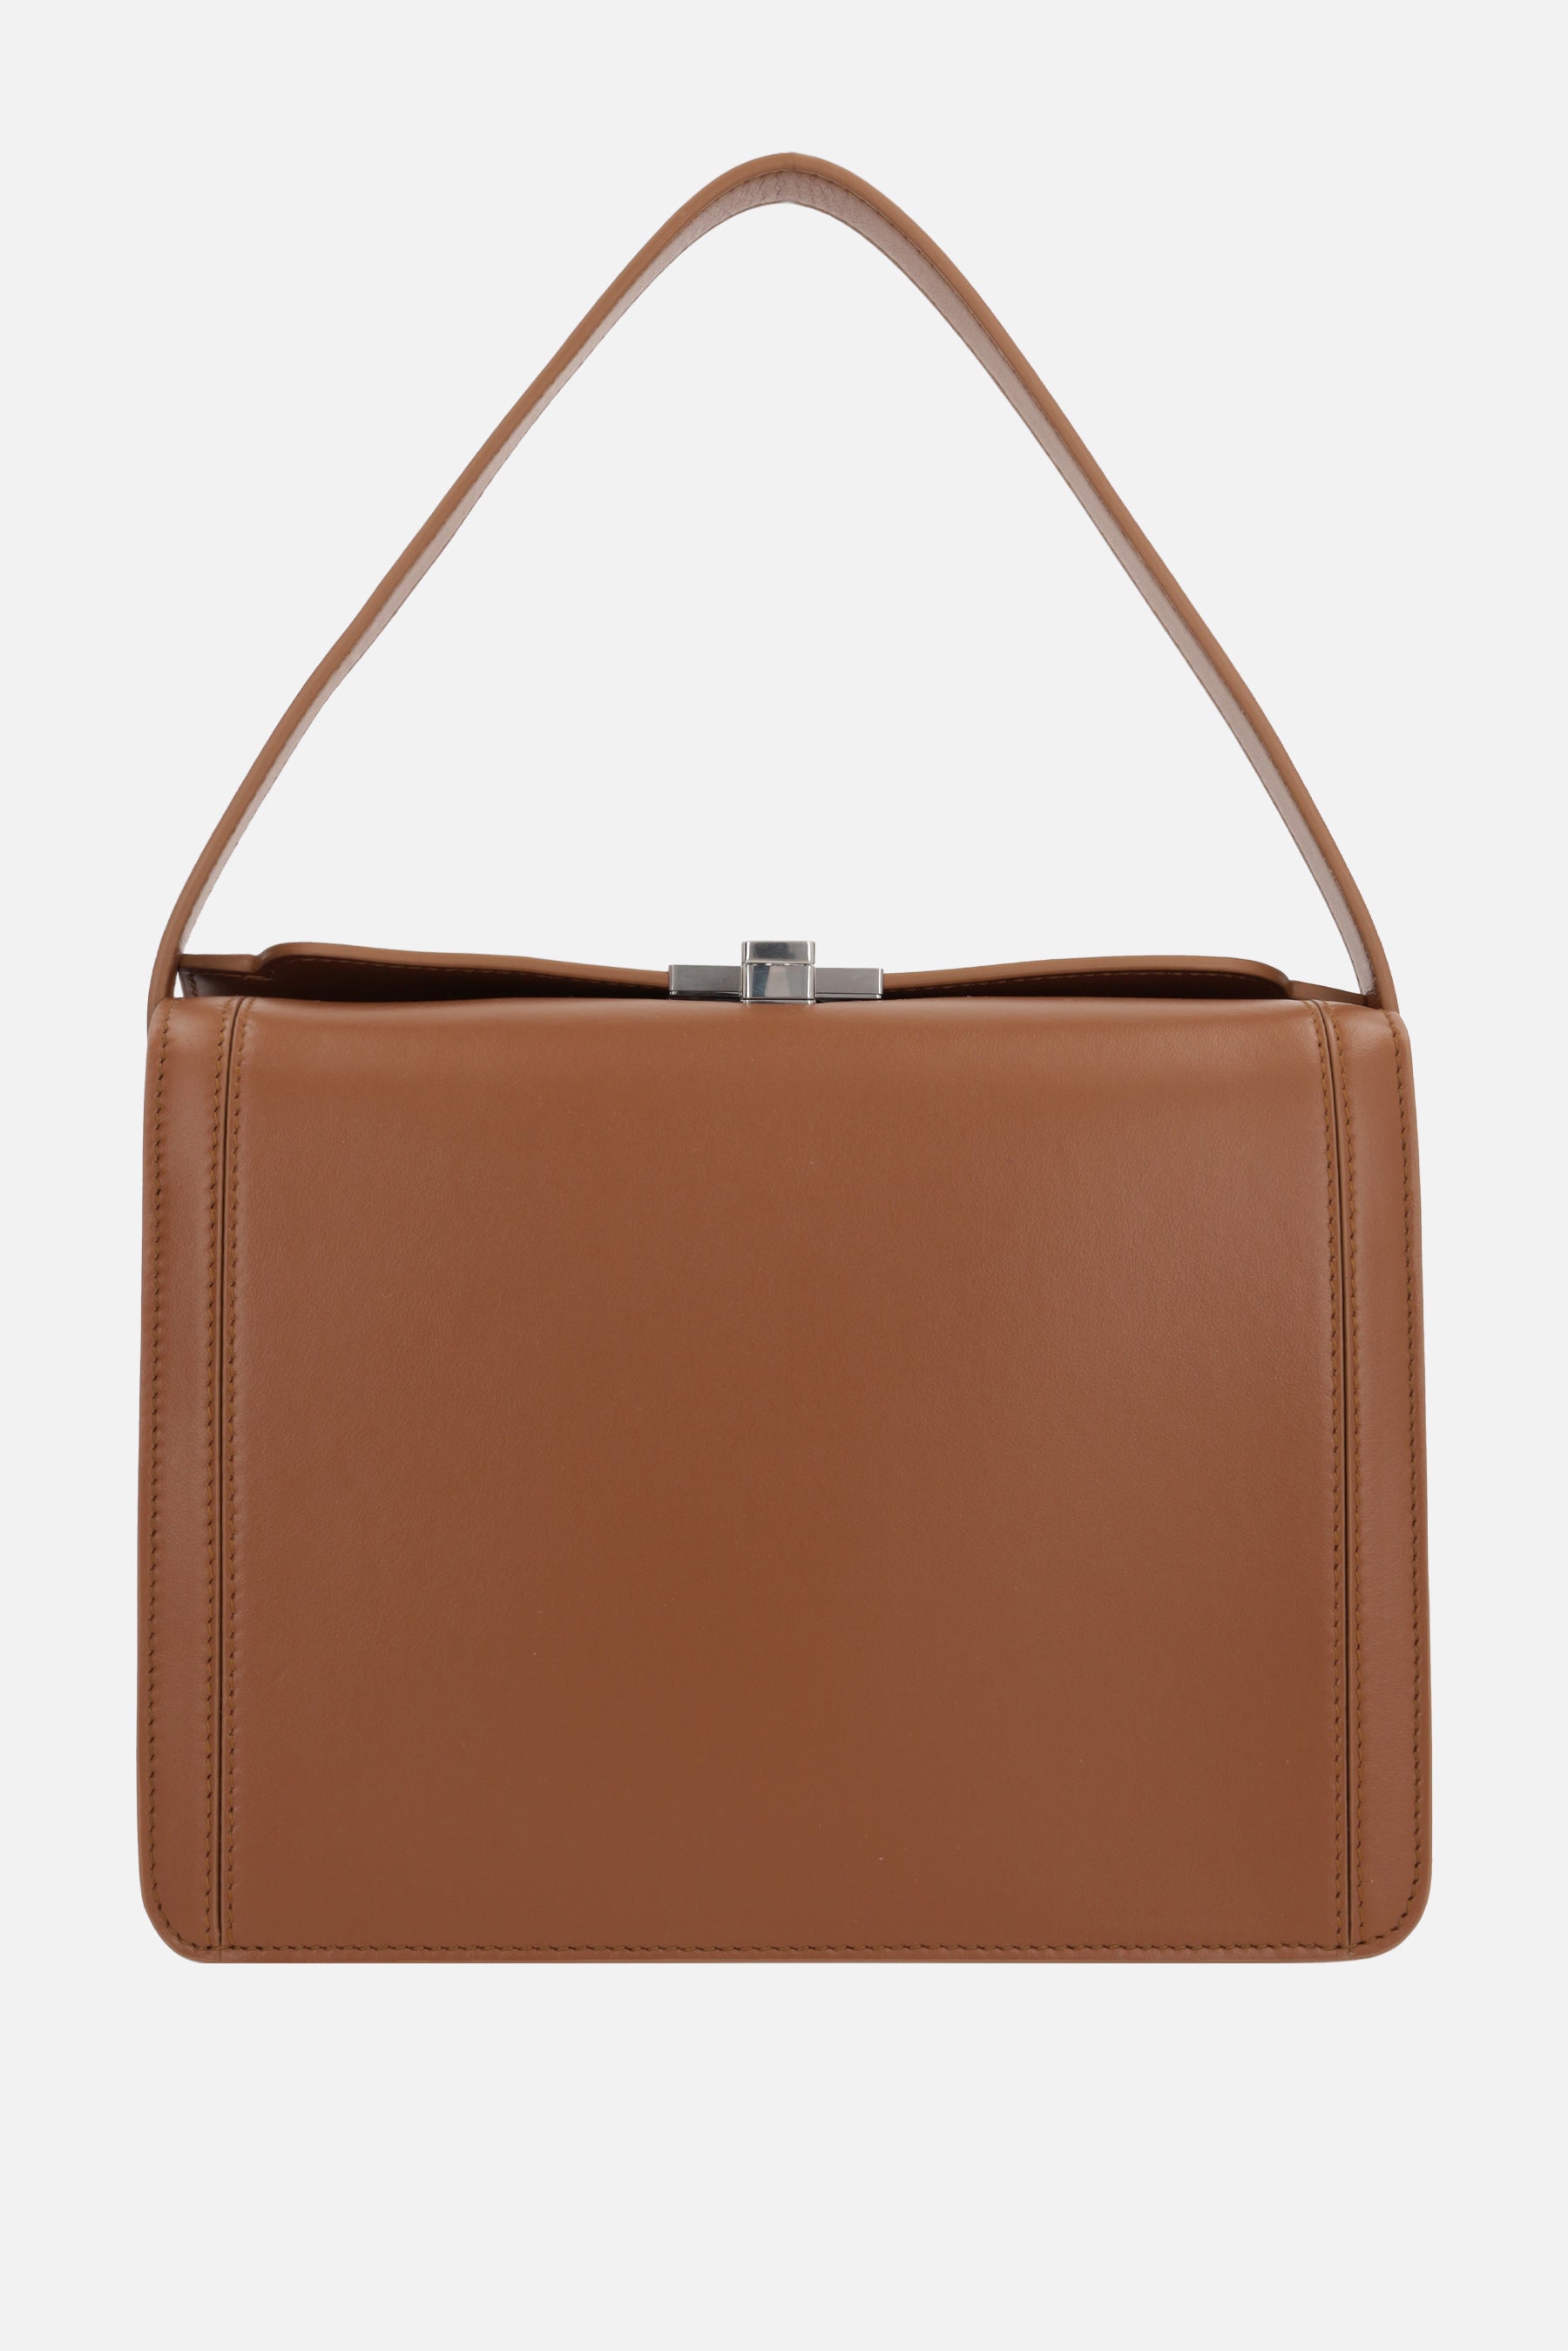 Petit Palais smooth leather handbag